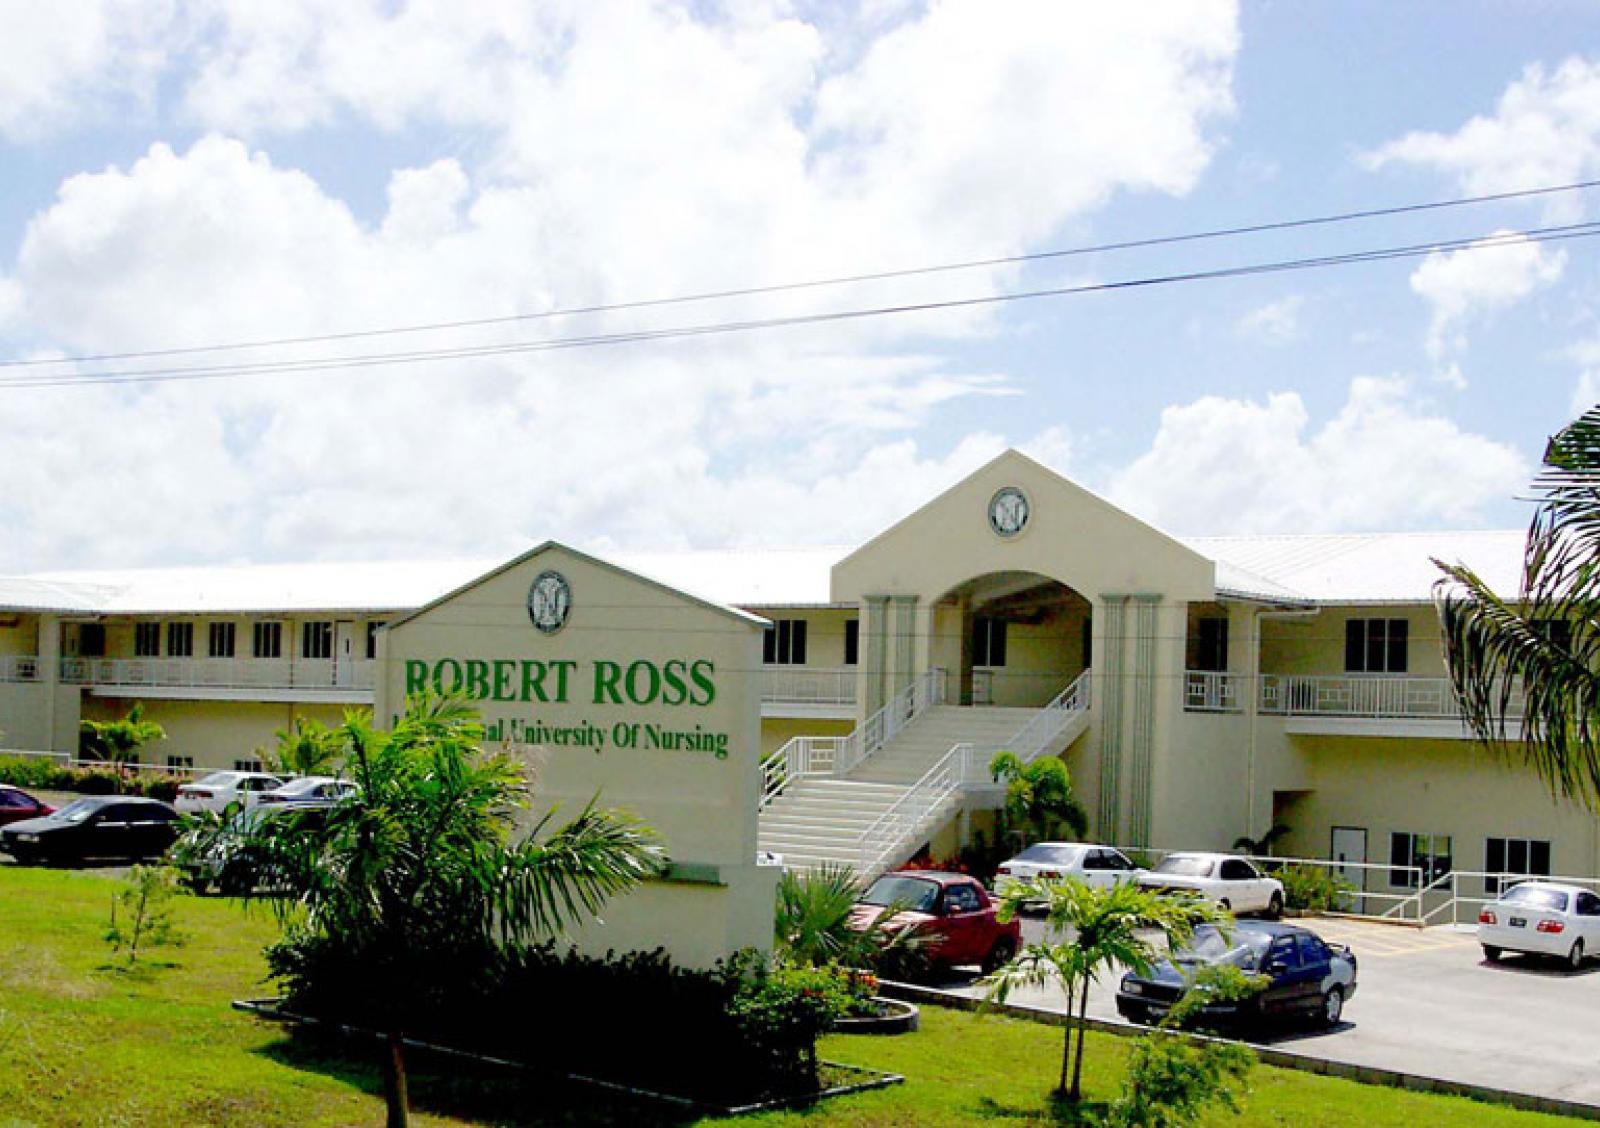 Robert Ross - University of Nursing